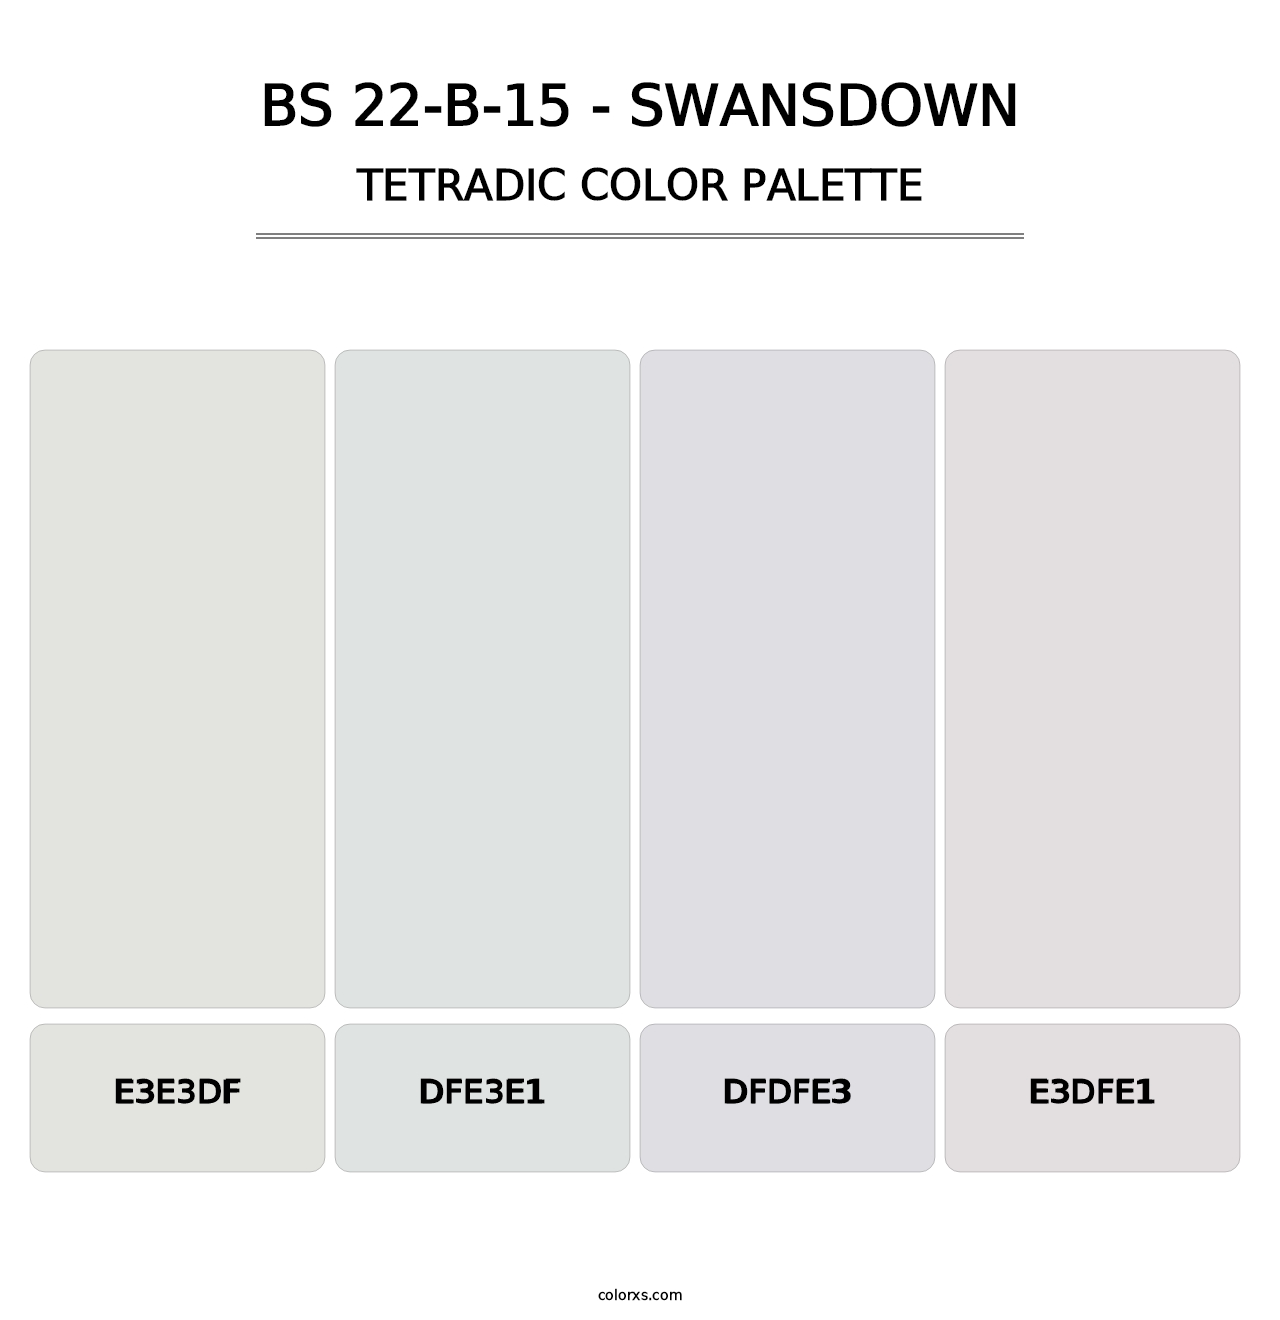 BS 22-B-15 - Swansdown - Tetradic Color Palette